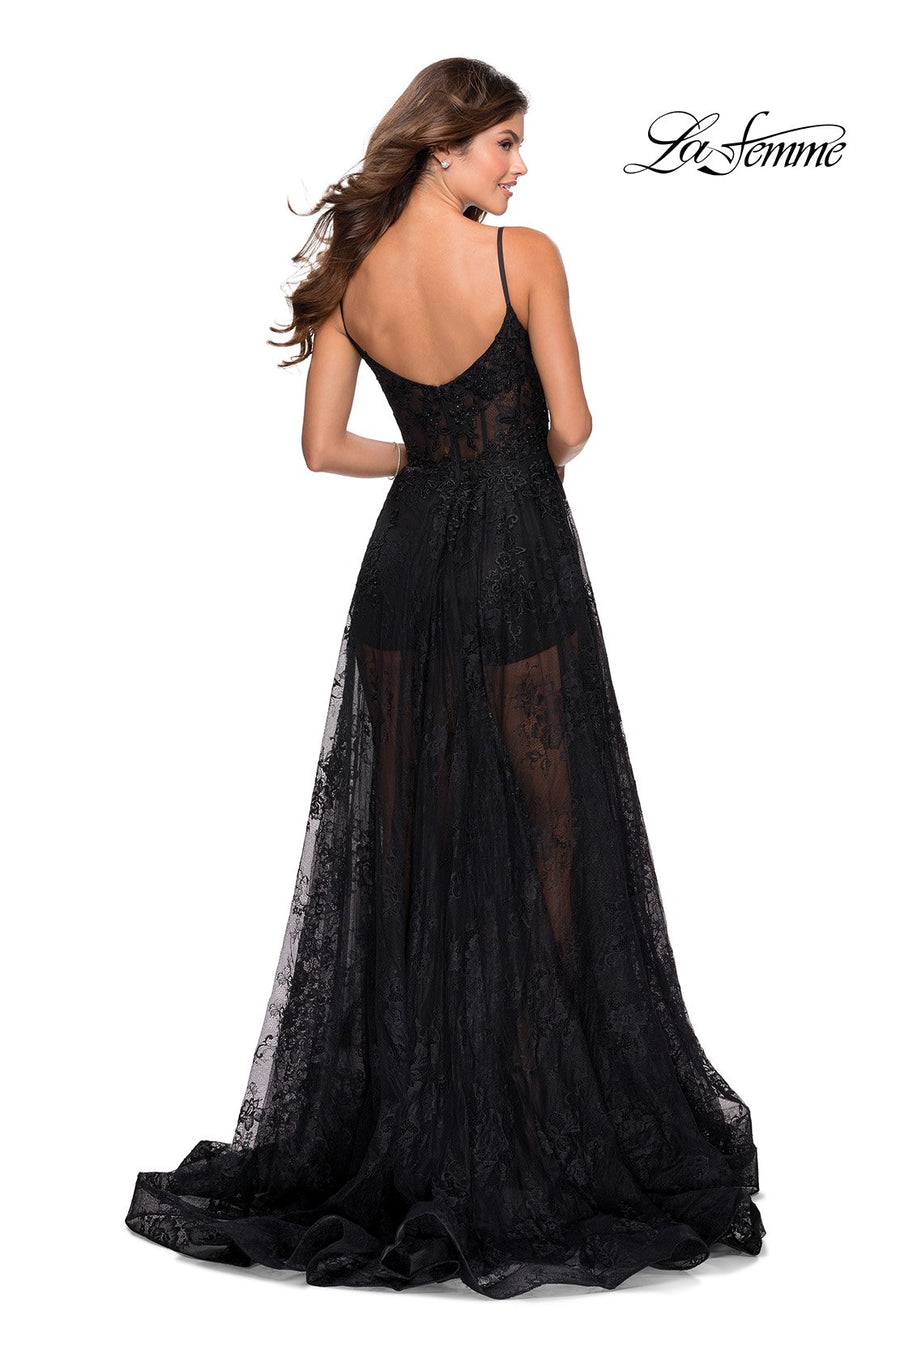 La Femme 28390 prom dress images.  La Femme 28390 is available in these colors: Black.